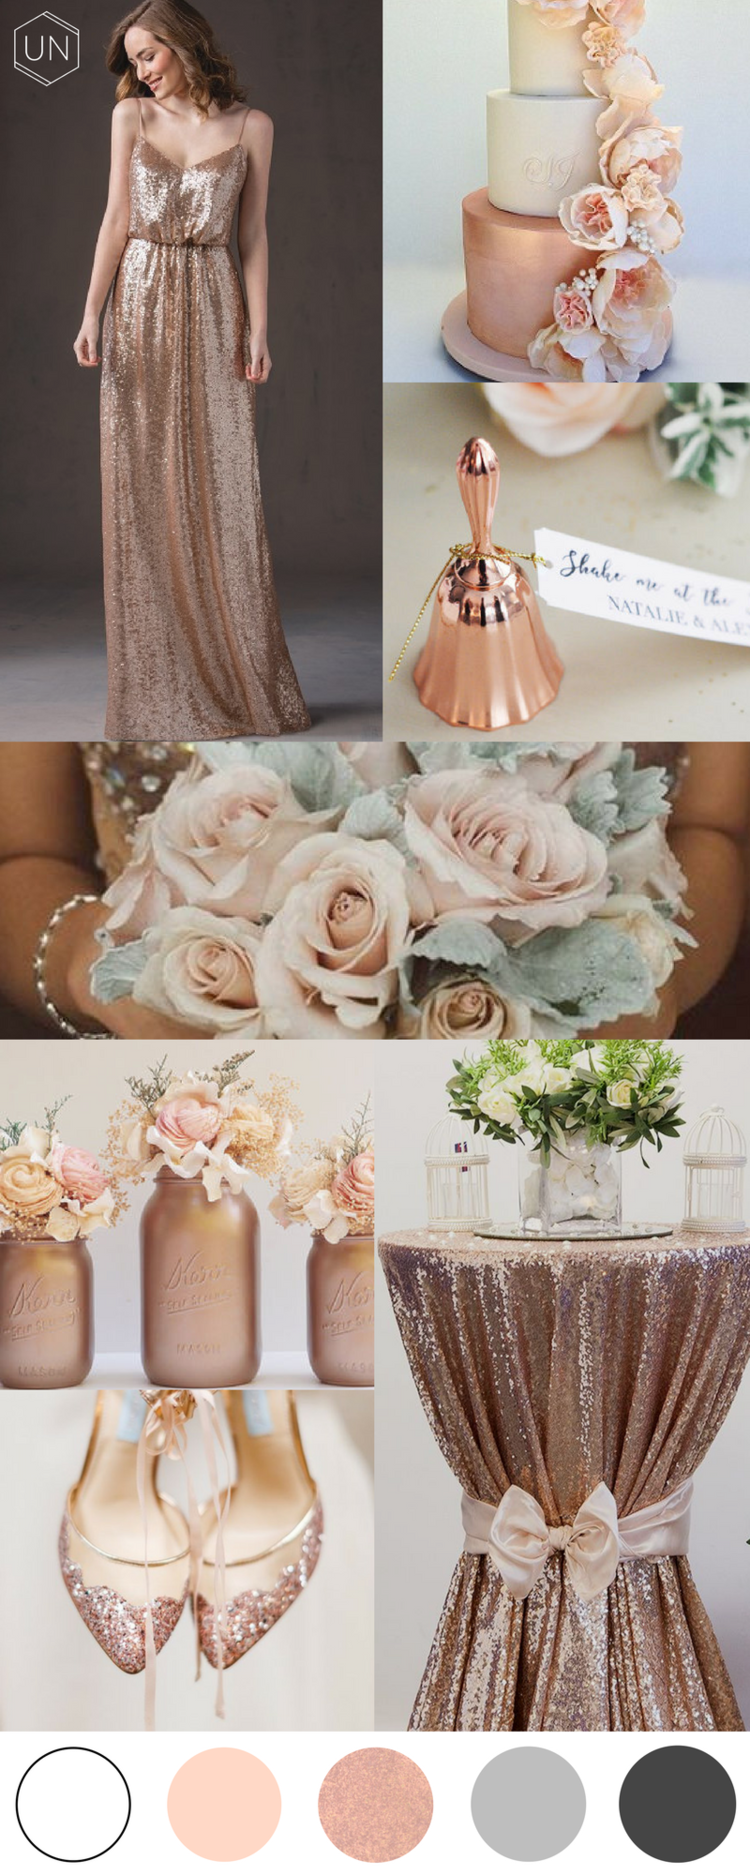 Rose gold wedding inspiration -   15 wedding Rose Gold inspiration boards ideas